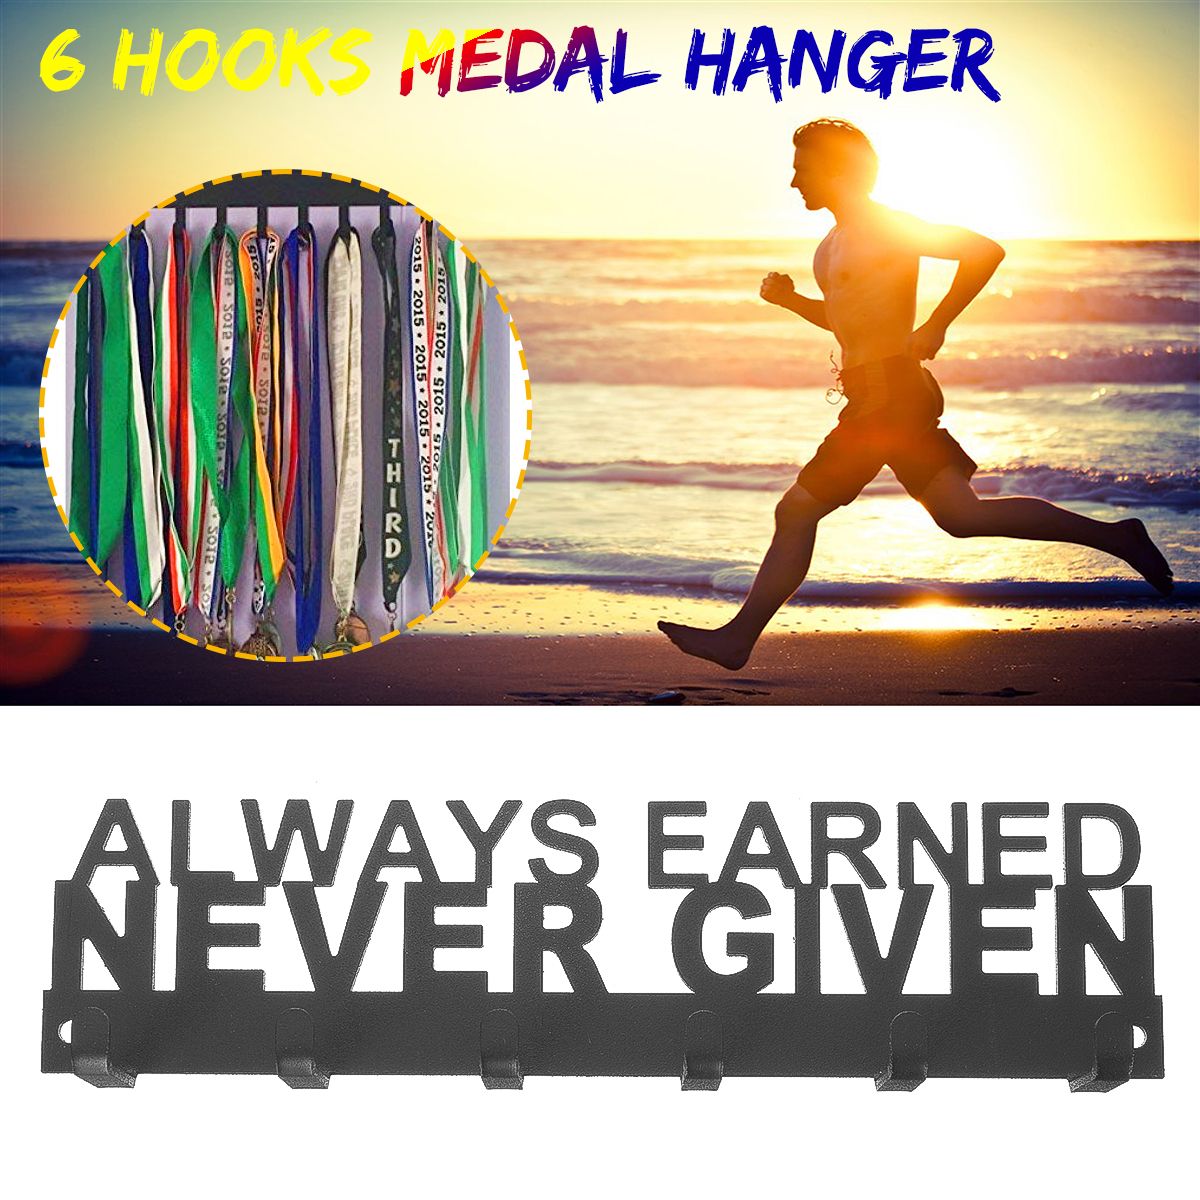 Always-Earned-Never-Given-Medal-Hanger-Sport-Iron-Metal-Display-Rack-Holder-Decorations-1560485